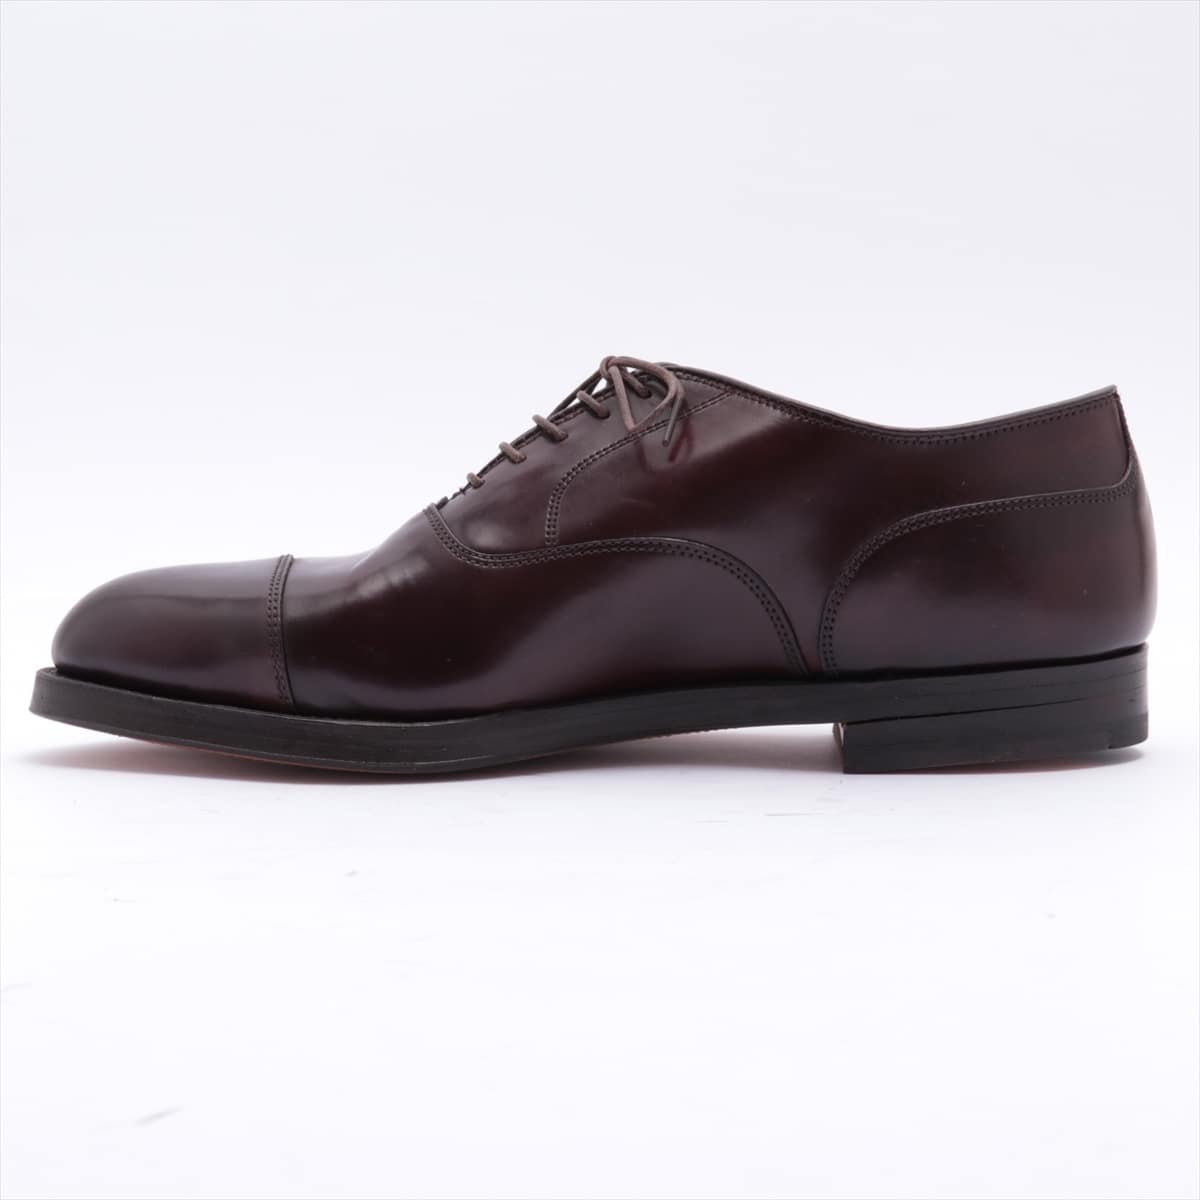 Alden Leather Shoes 9 Men's Brown Straight tip